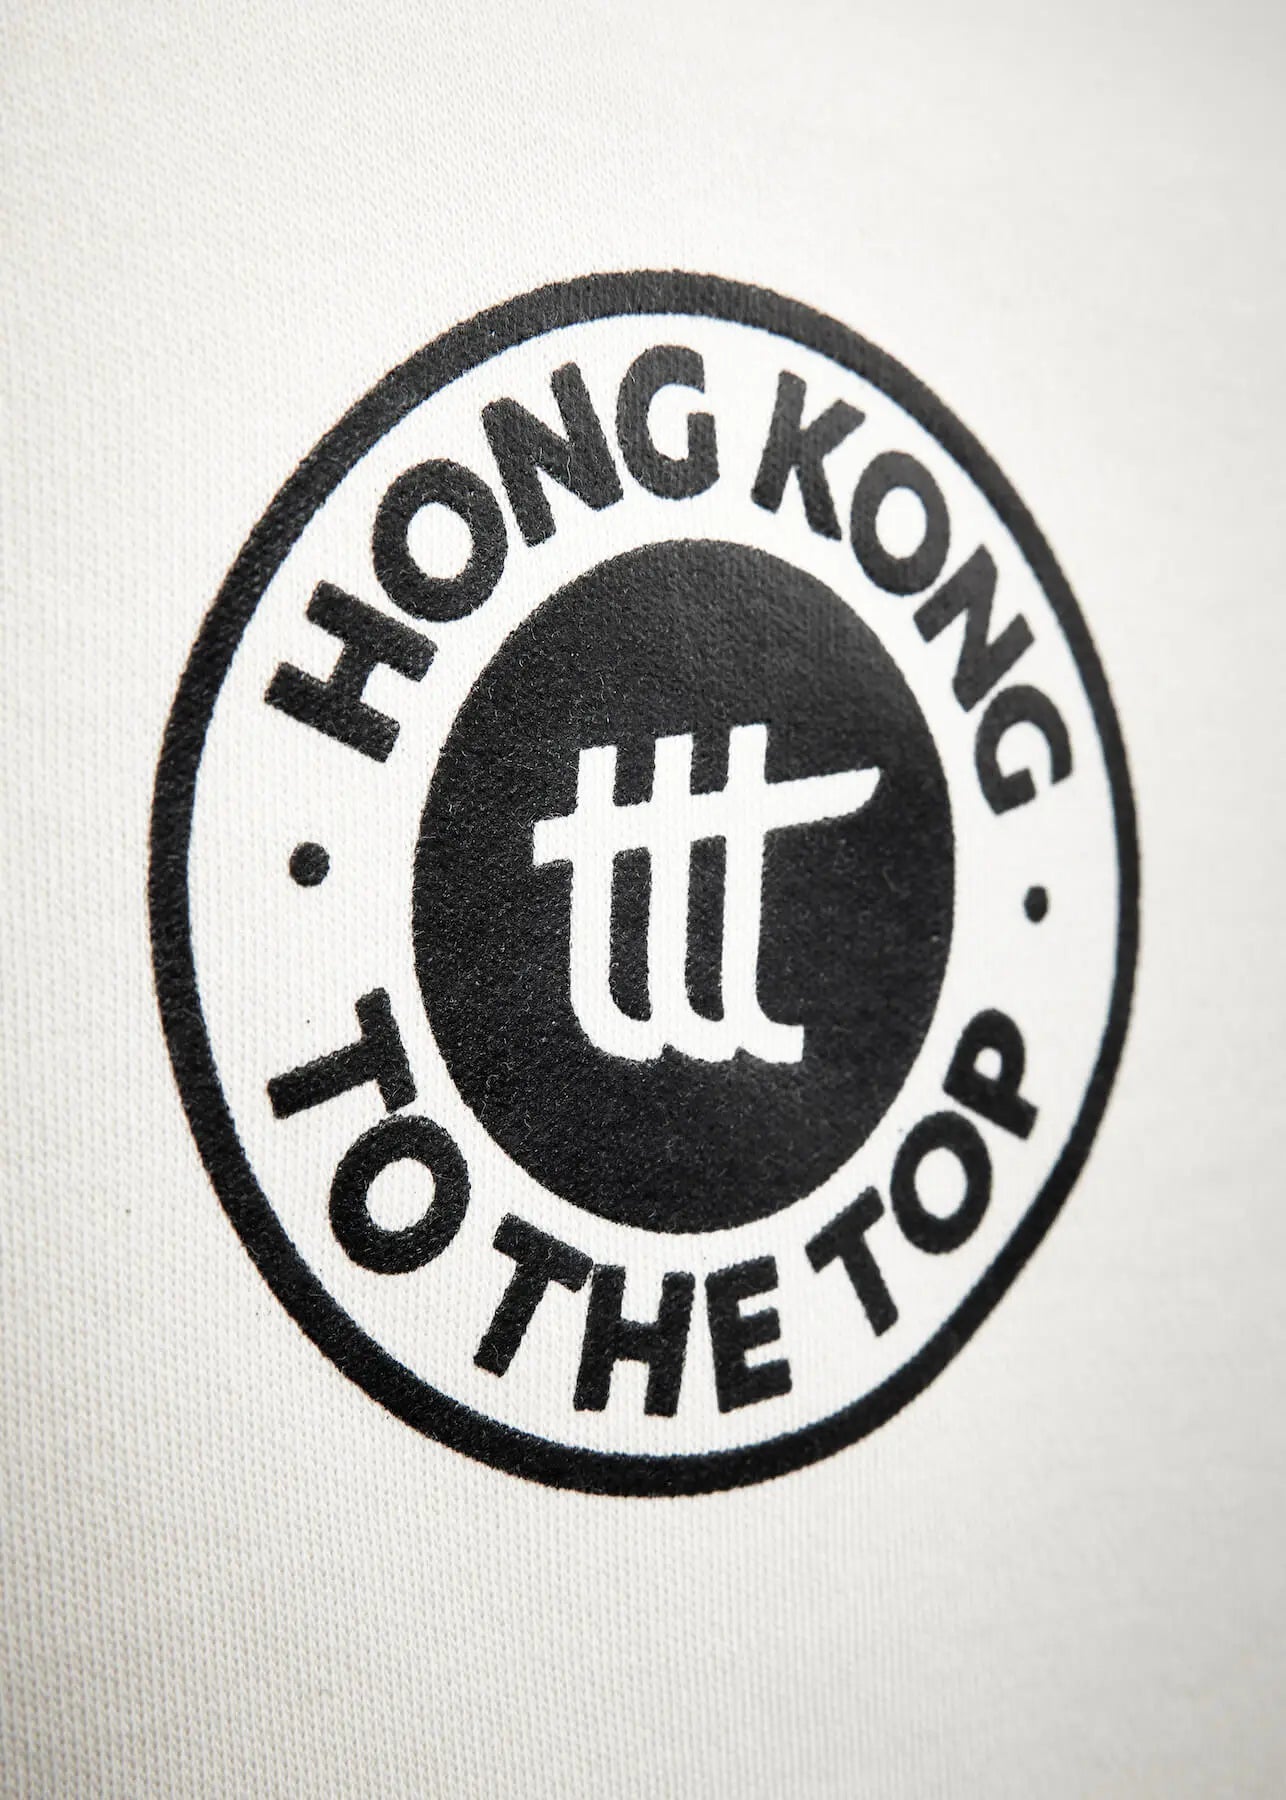 Hong Kong T-Shirt